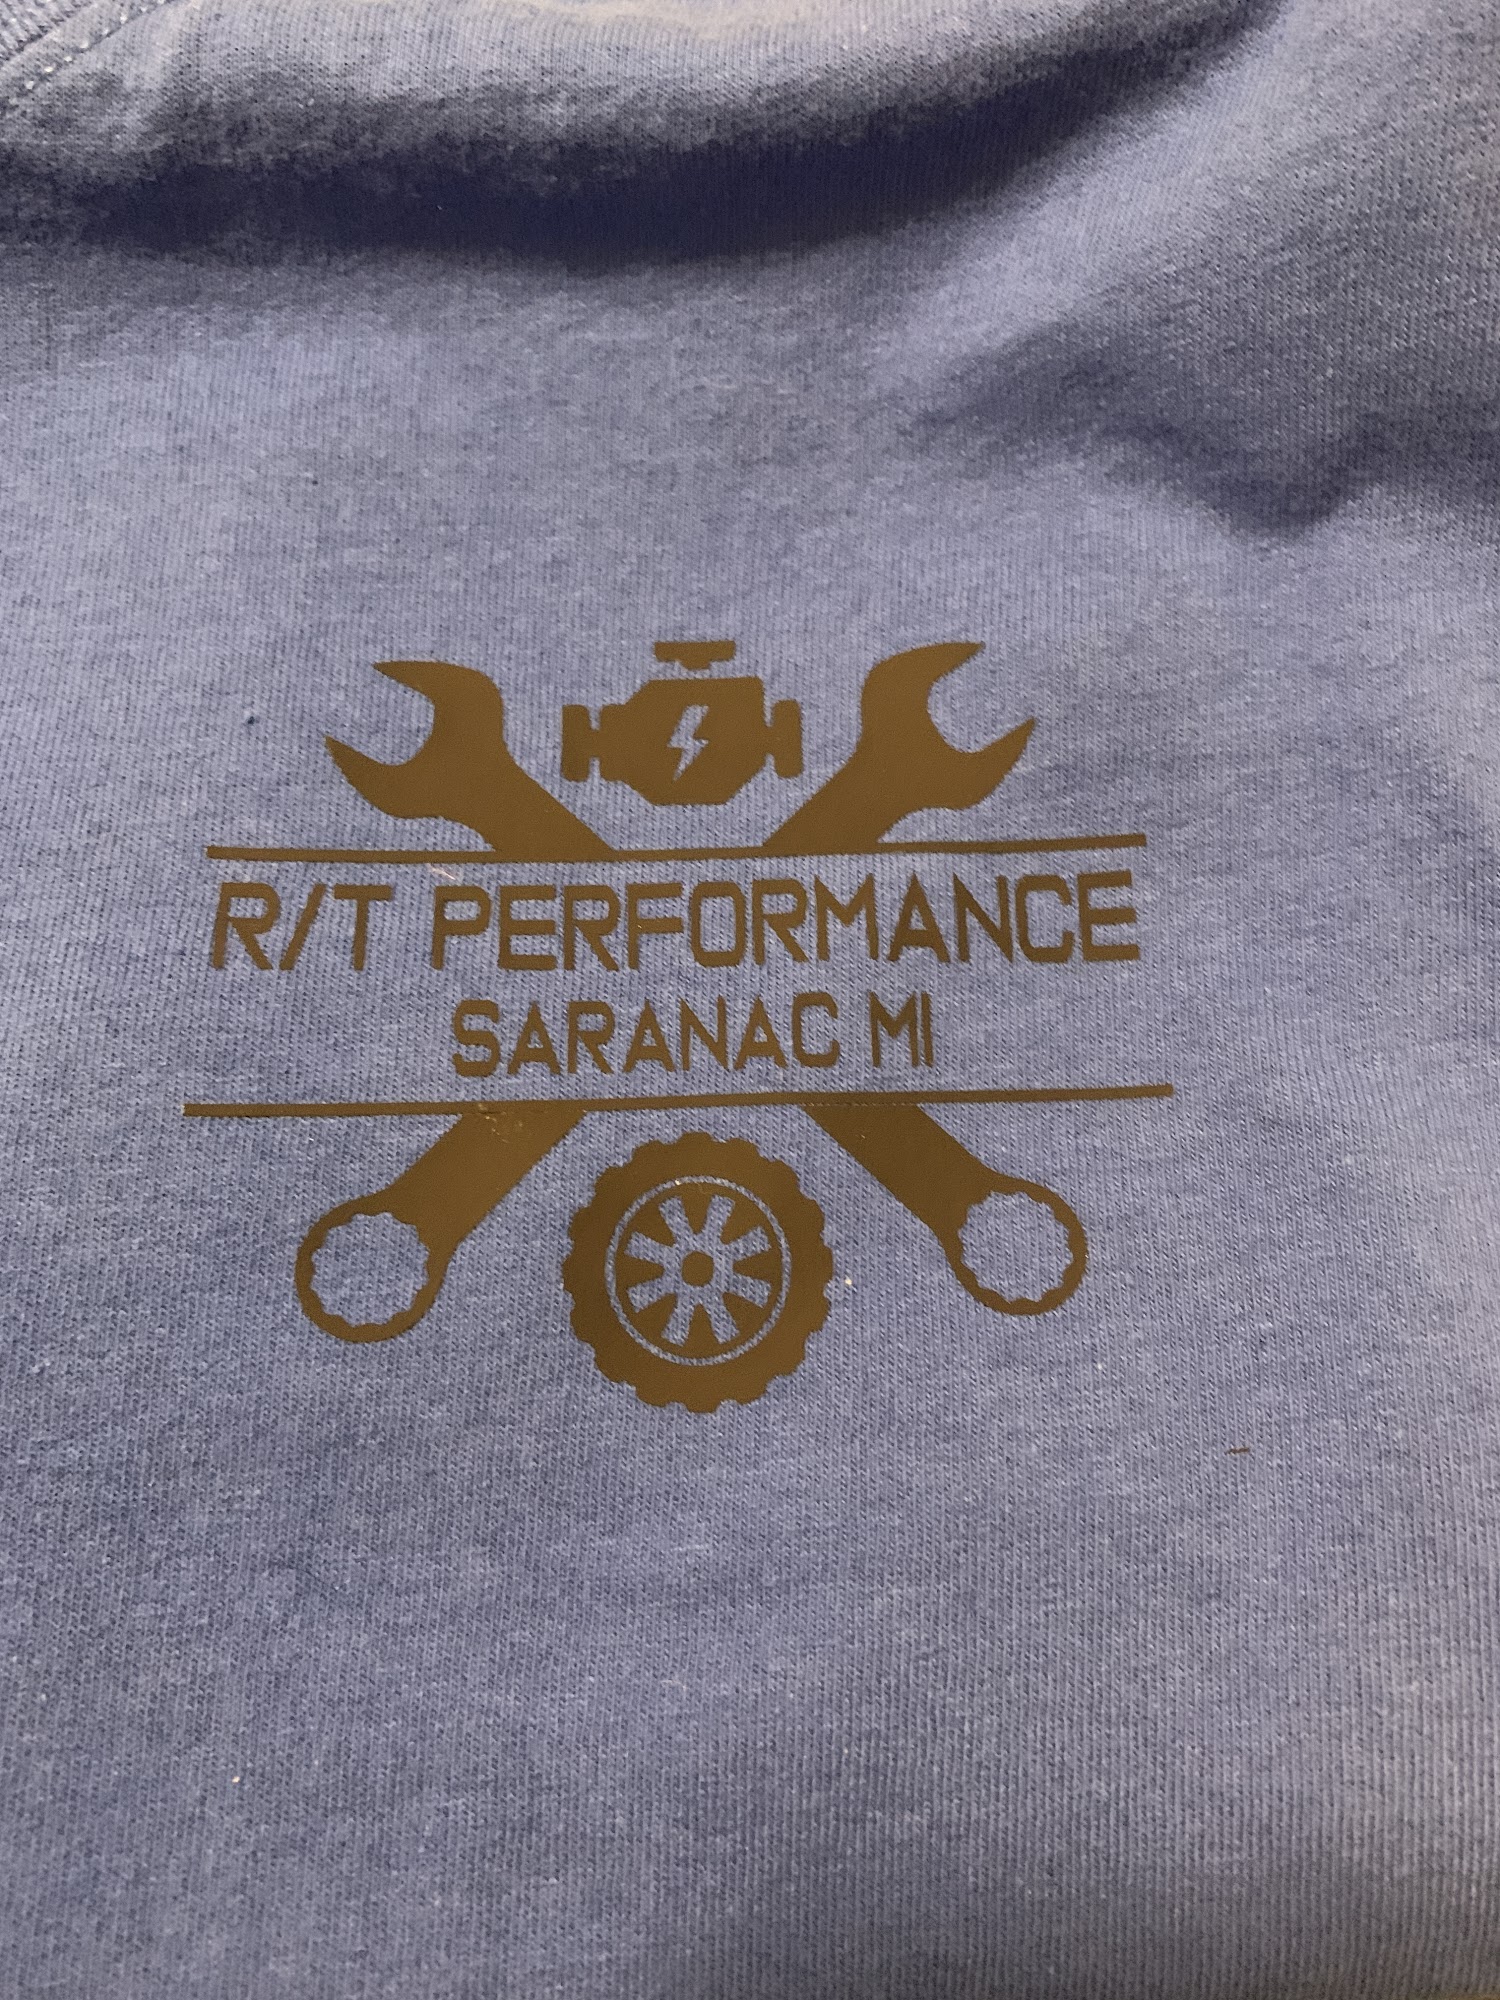 R/T Performance Auto Services